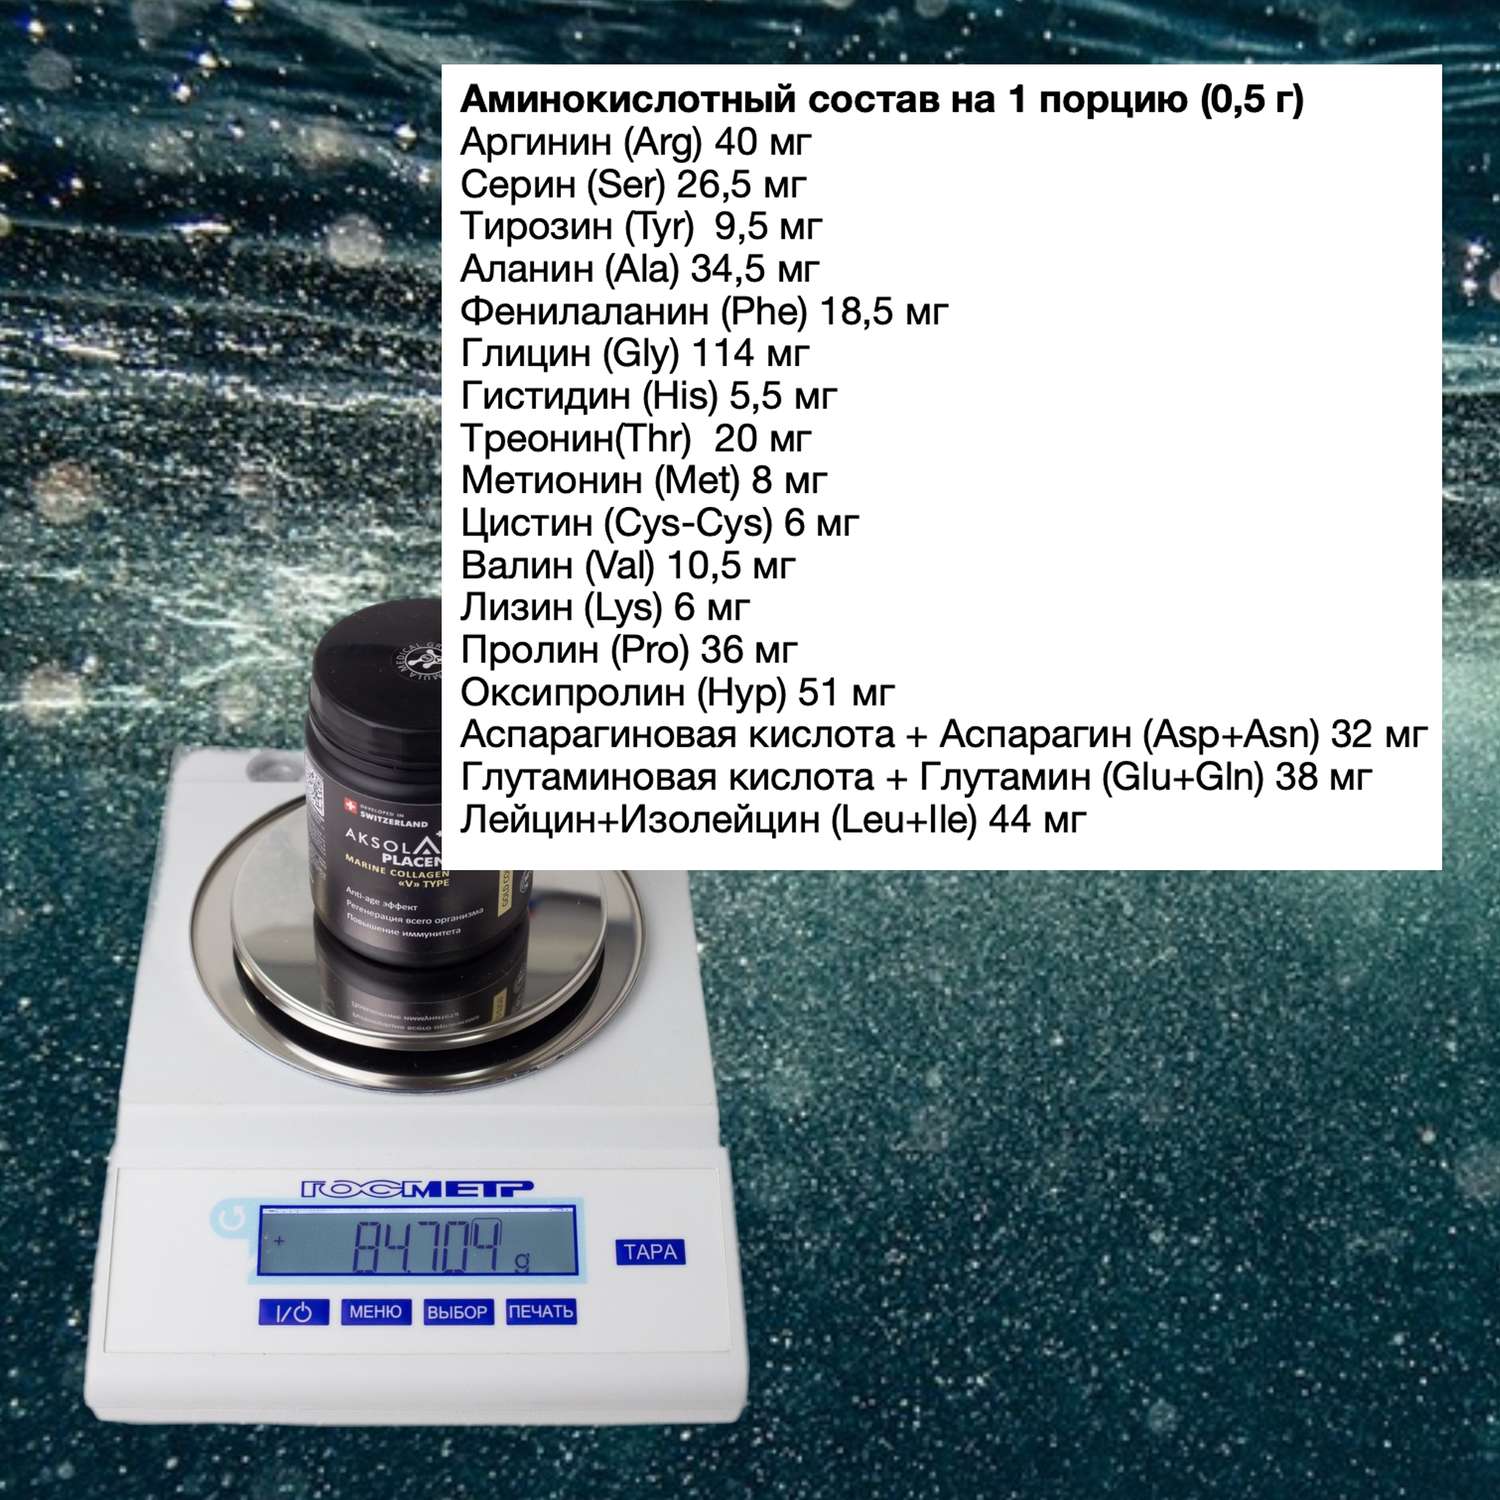 Морской Плацентарный Коллаген AKSOLAGEN 5 типа антиэйдж эффект - фото 8